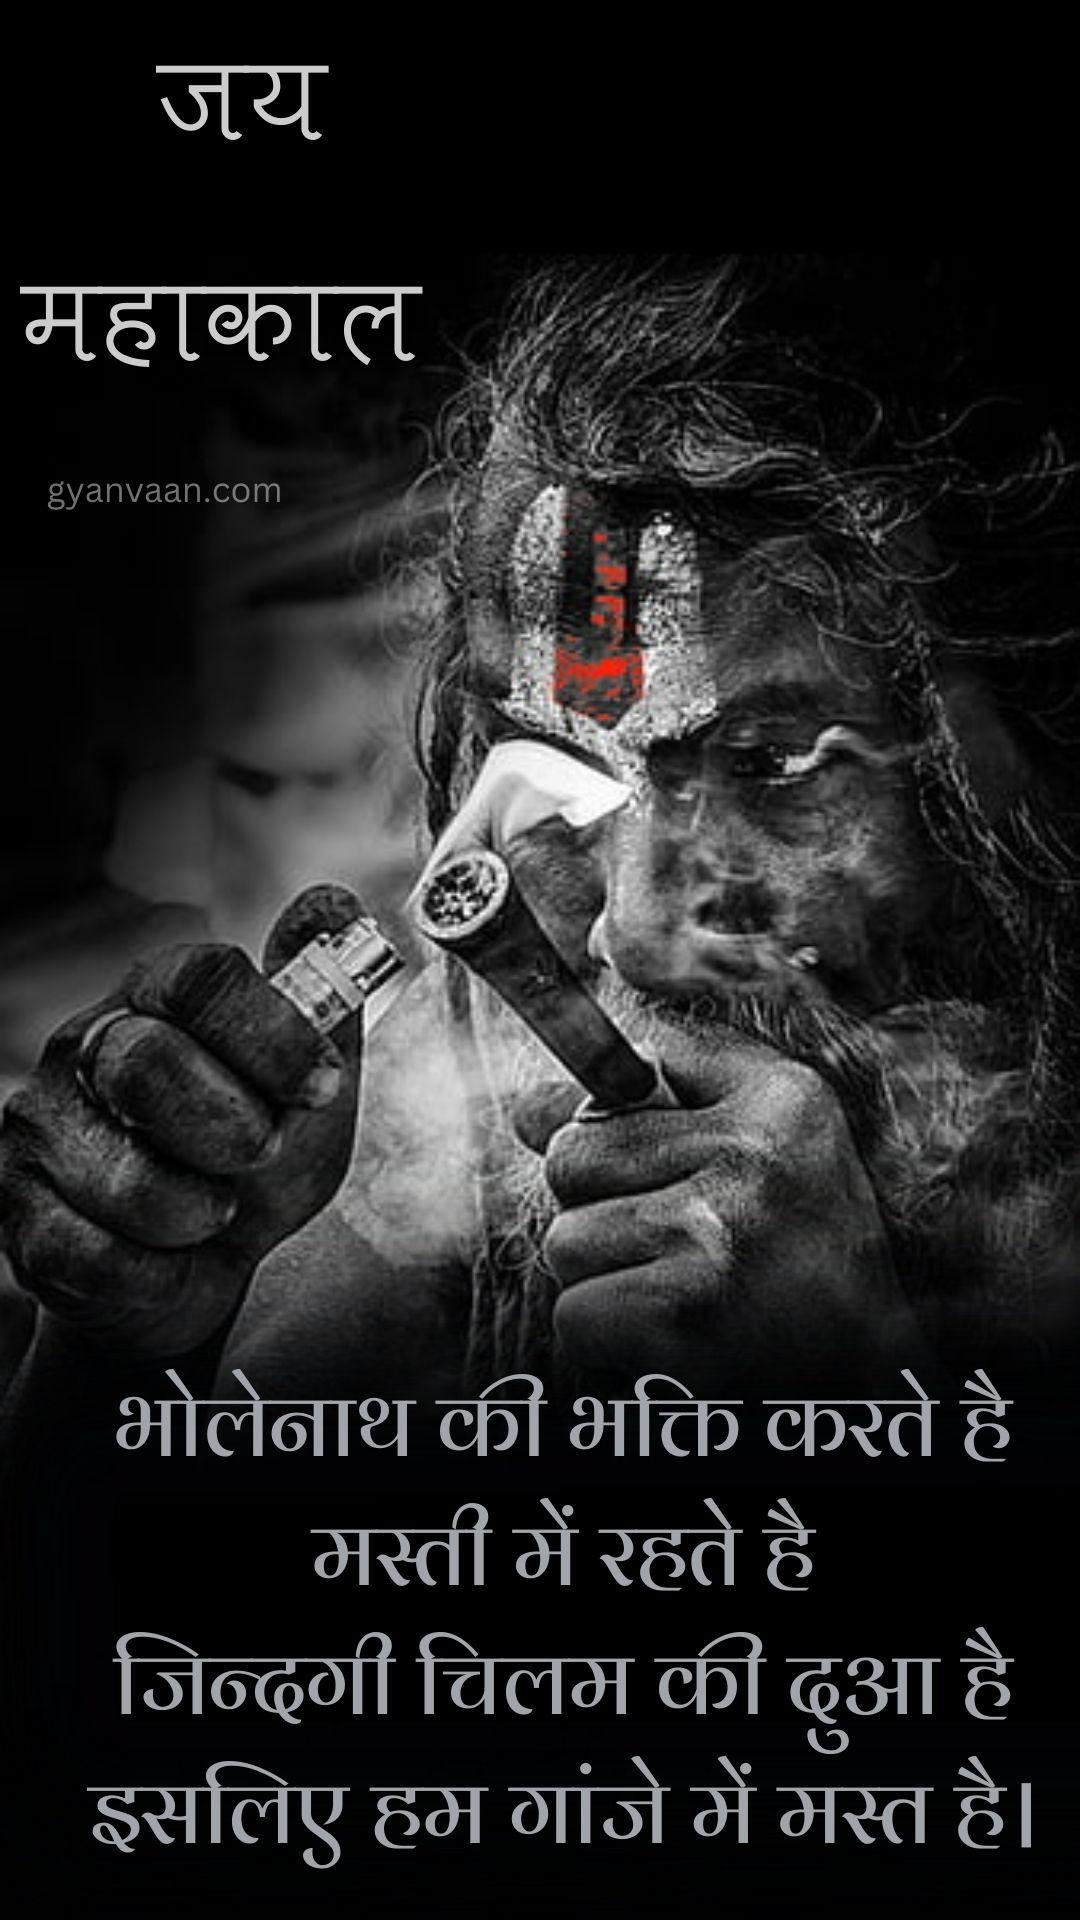 Lord Shiva Mahadev Quotes And Mahakal Status In Hindi For Mobile 30 - Shiva Quotes